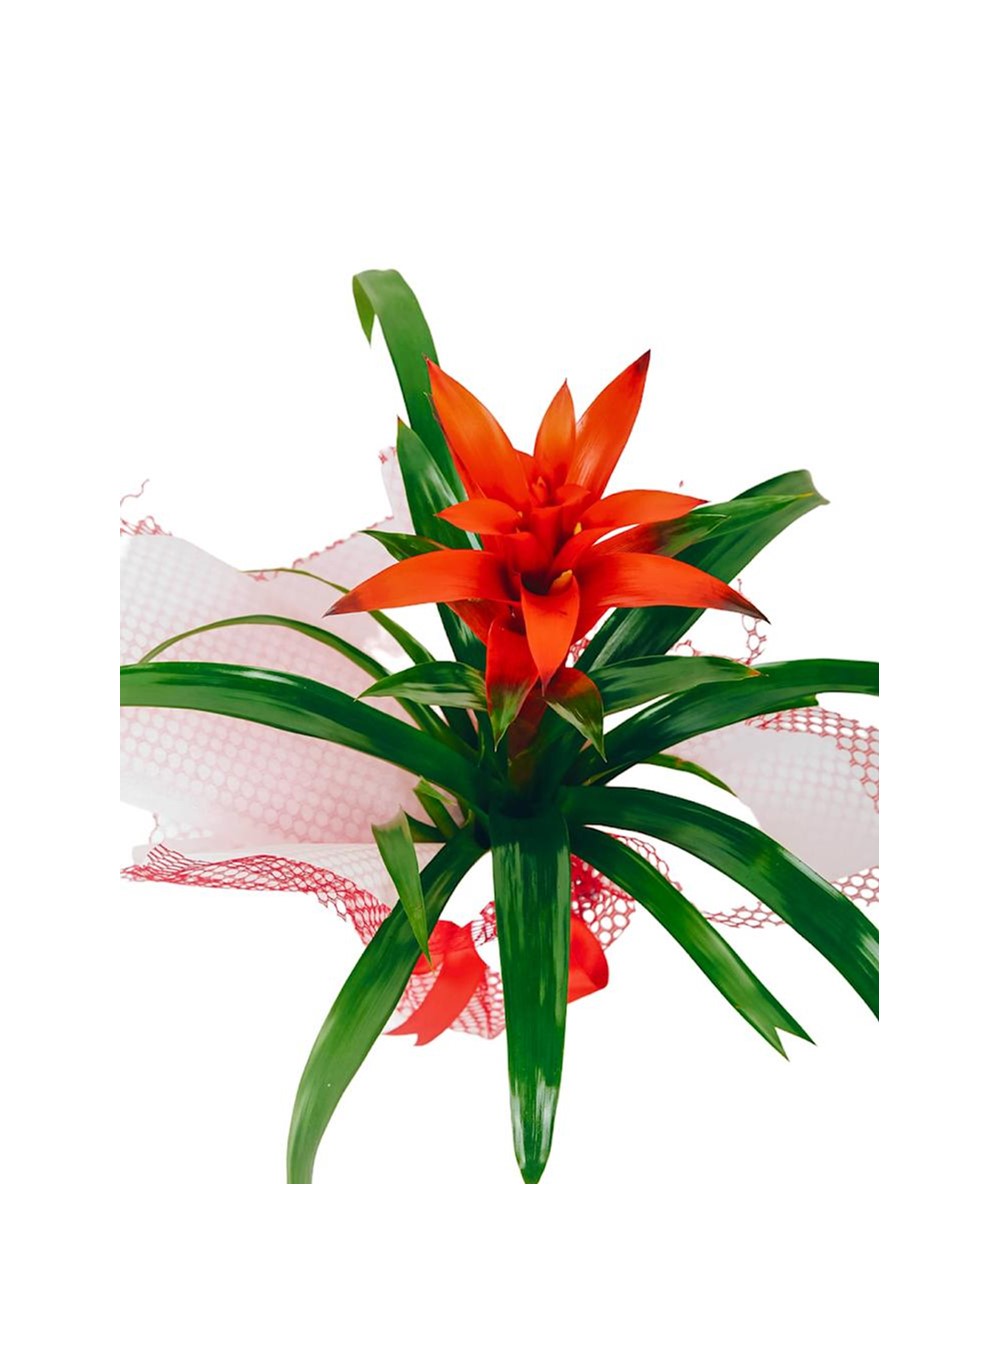 Red Bromeliad Plant